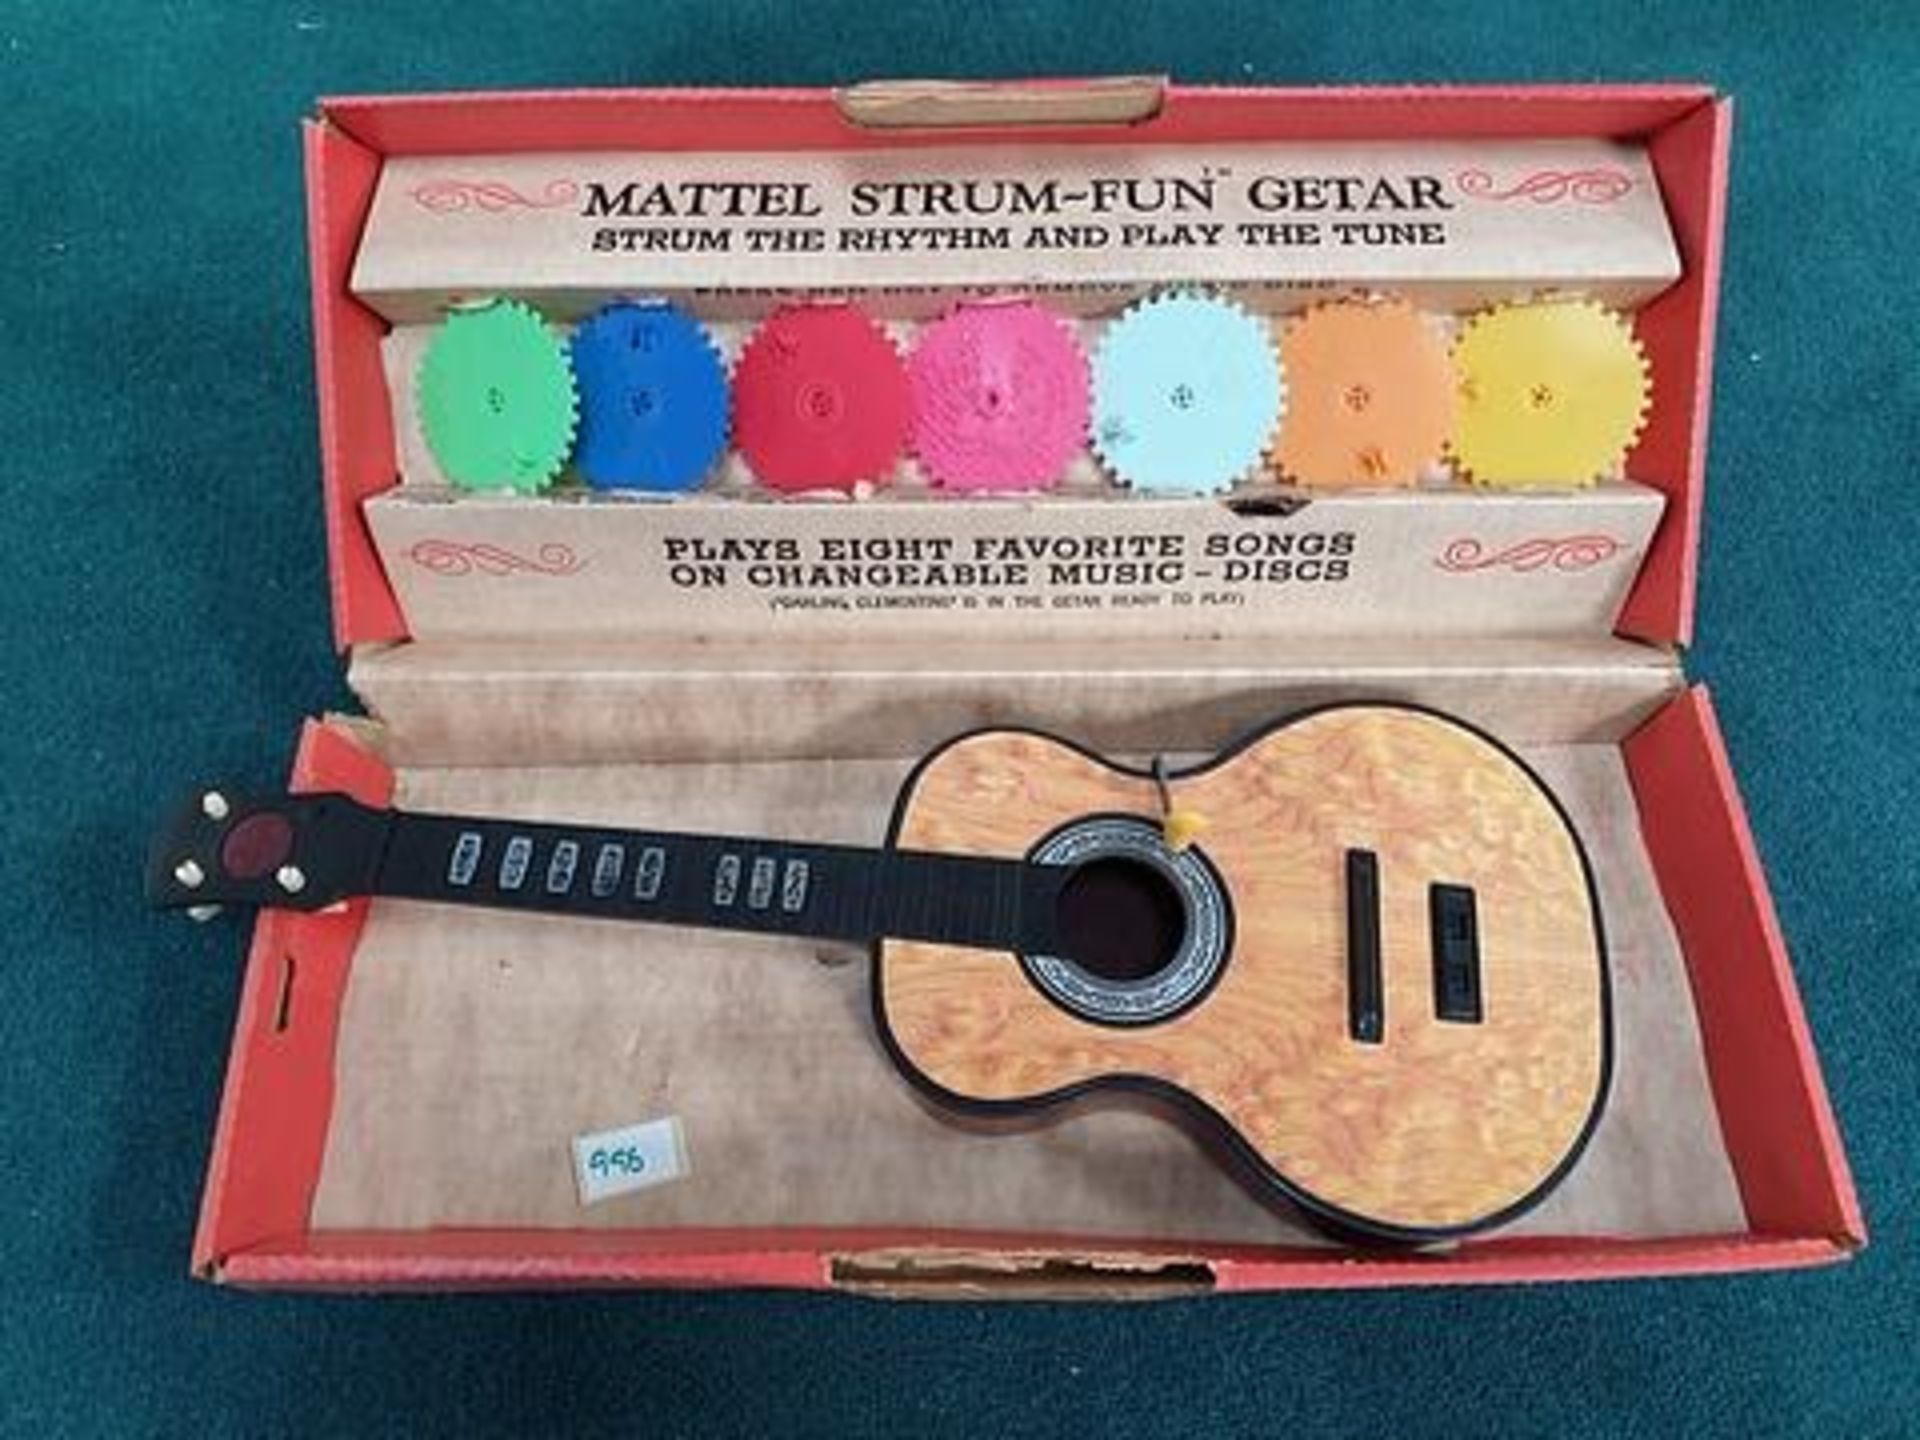 Mattel Strum-Fun Guitar 1959 No Strings Complete In Box